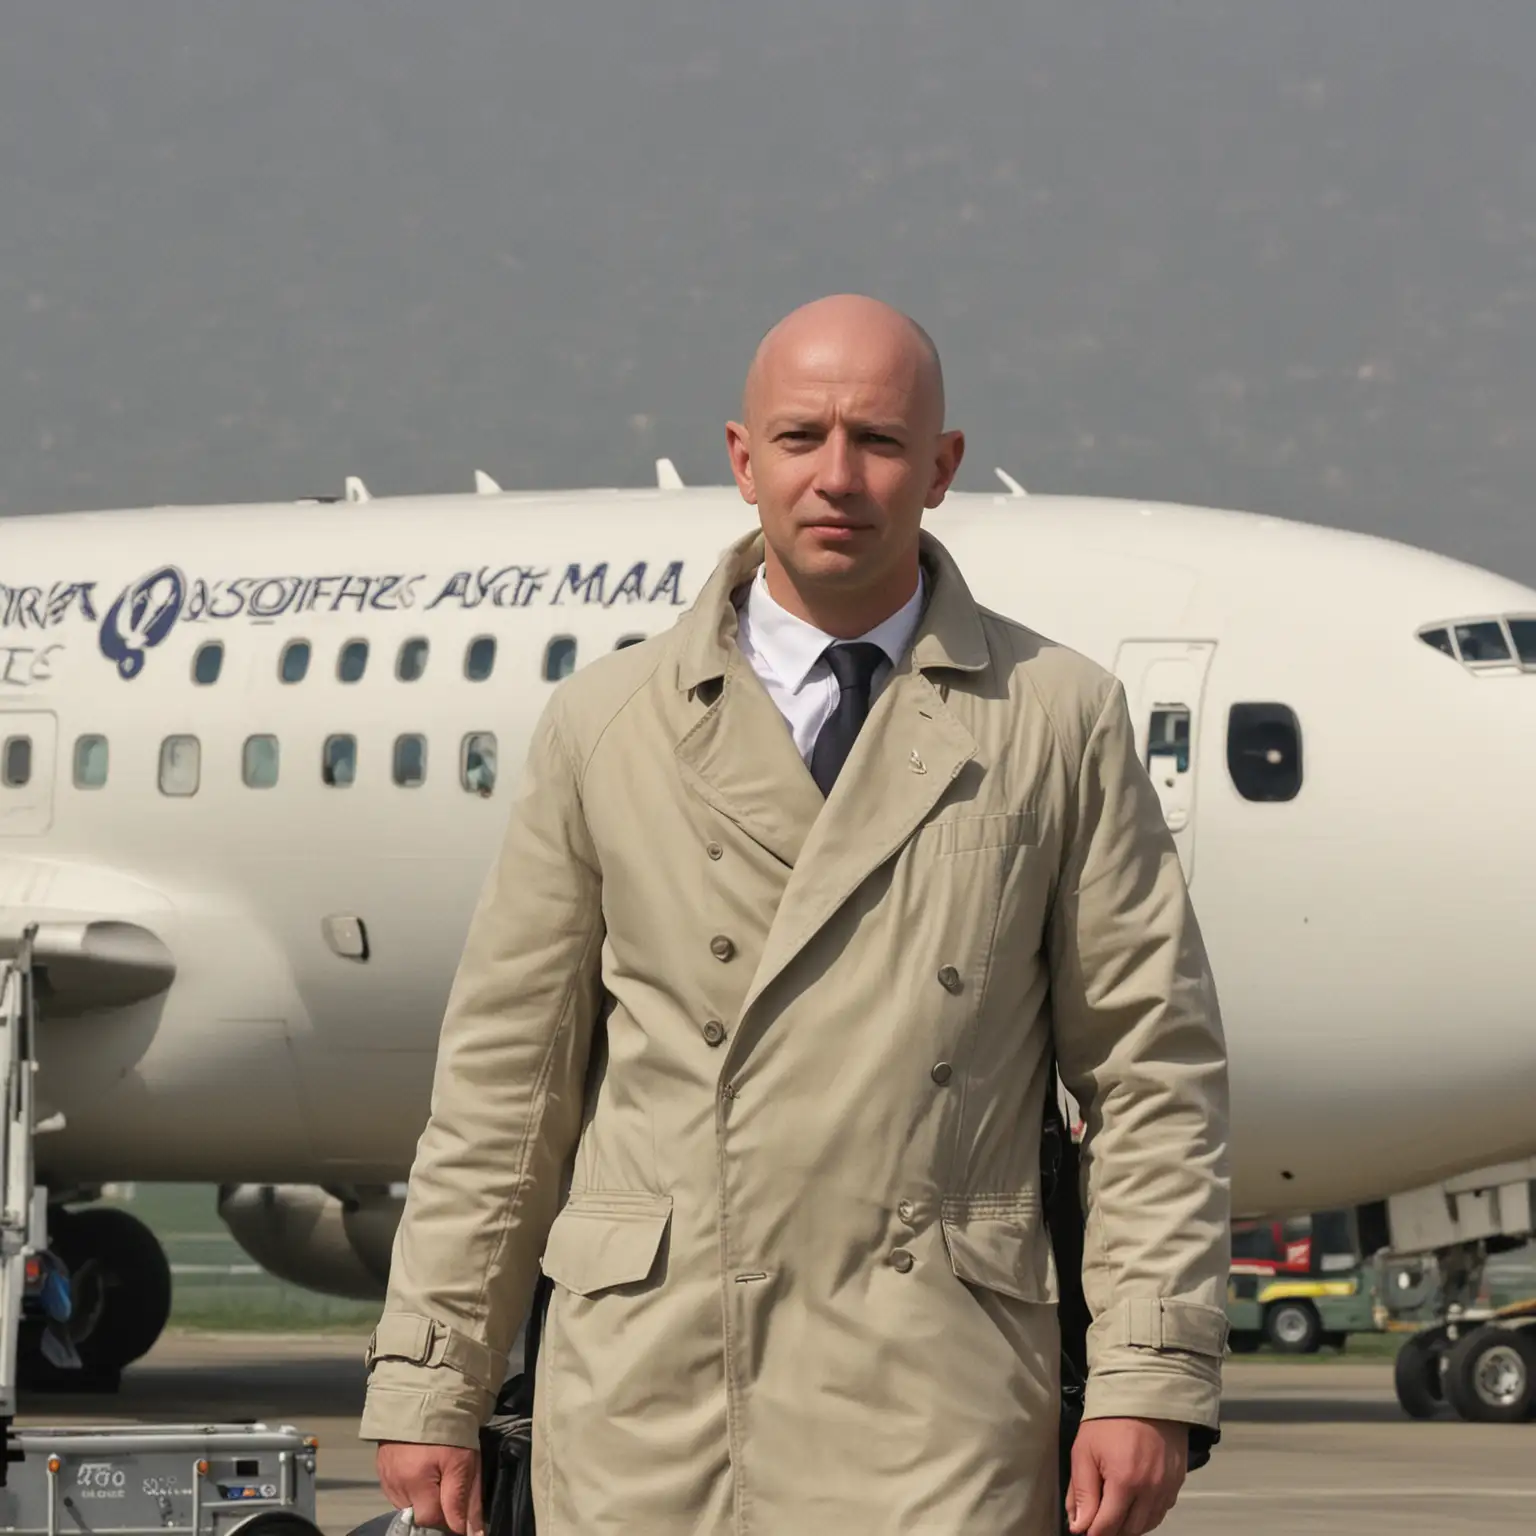 Bald white man arriving at Sofia Bulgaria